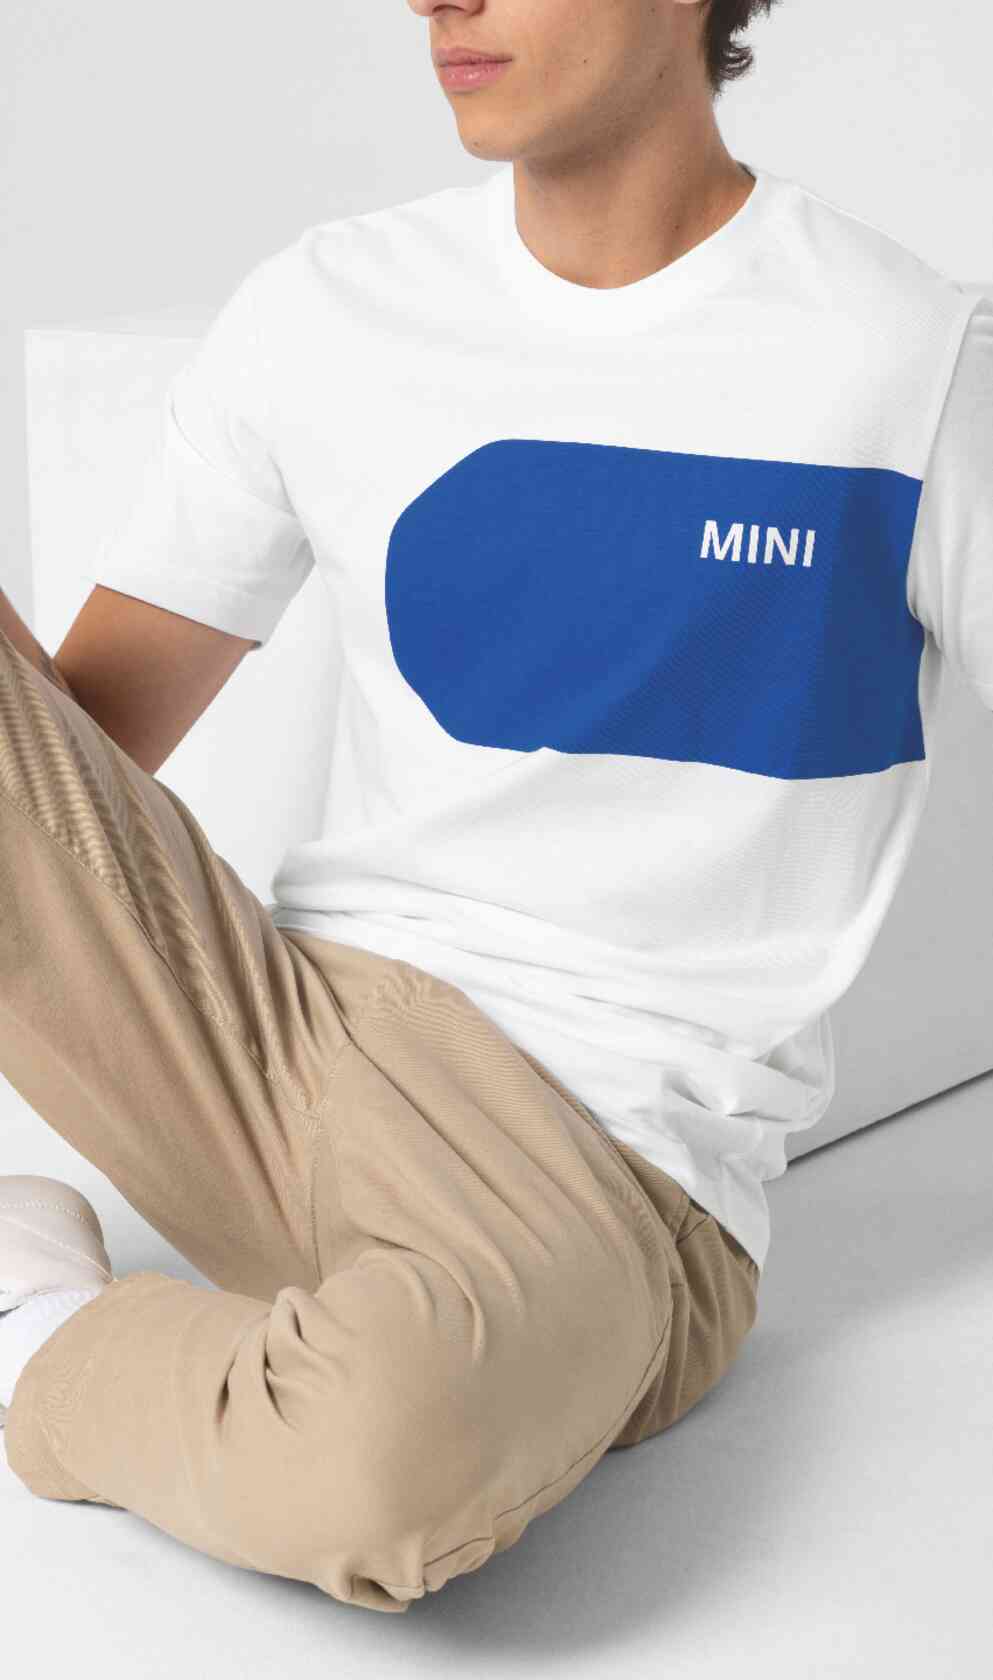 Mini Car Face T-Shirt for Man in Weiß / Blazing Blue